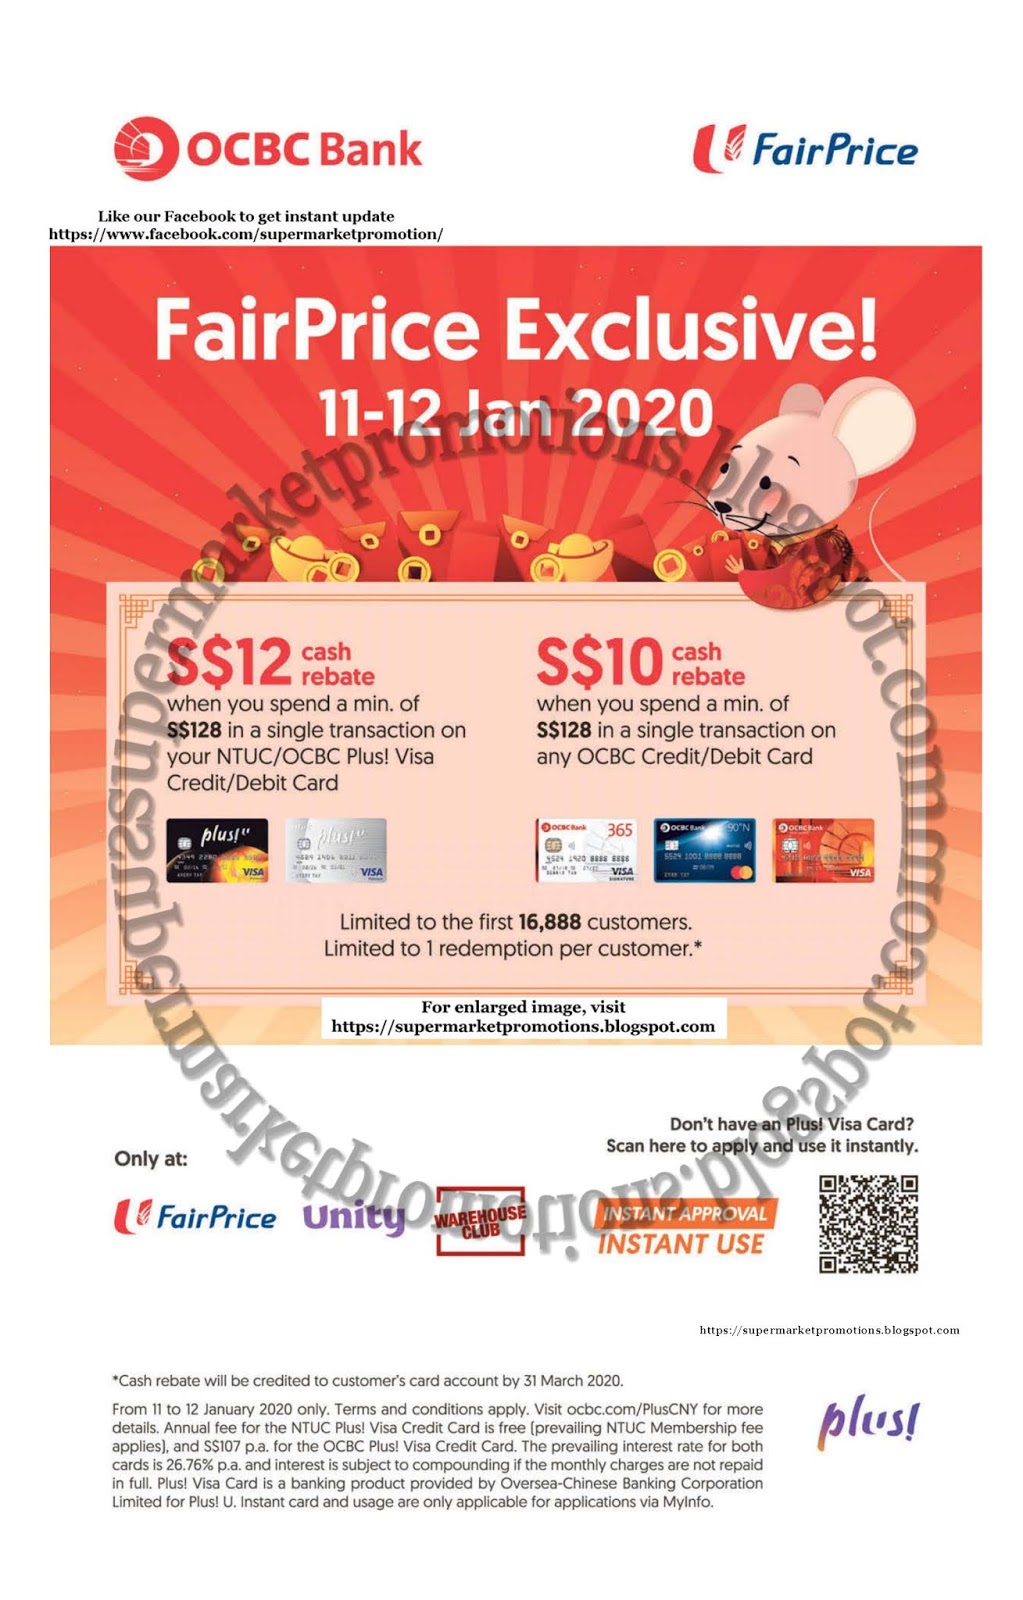 ntuc-fairprice-cny-ocbc-exclusive-cash-rebate-11-12-january-2020